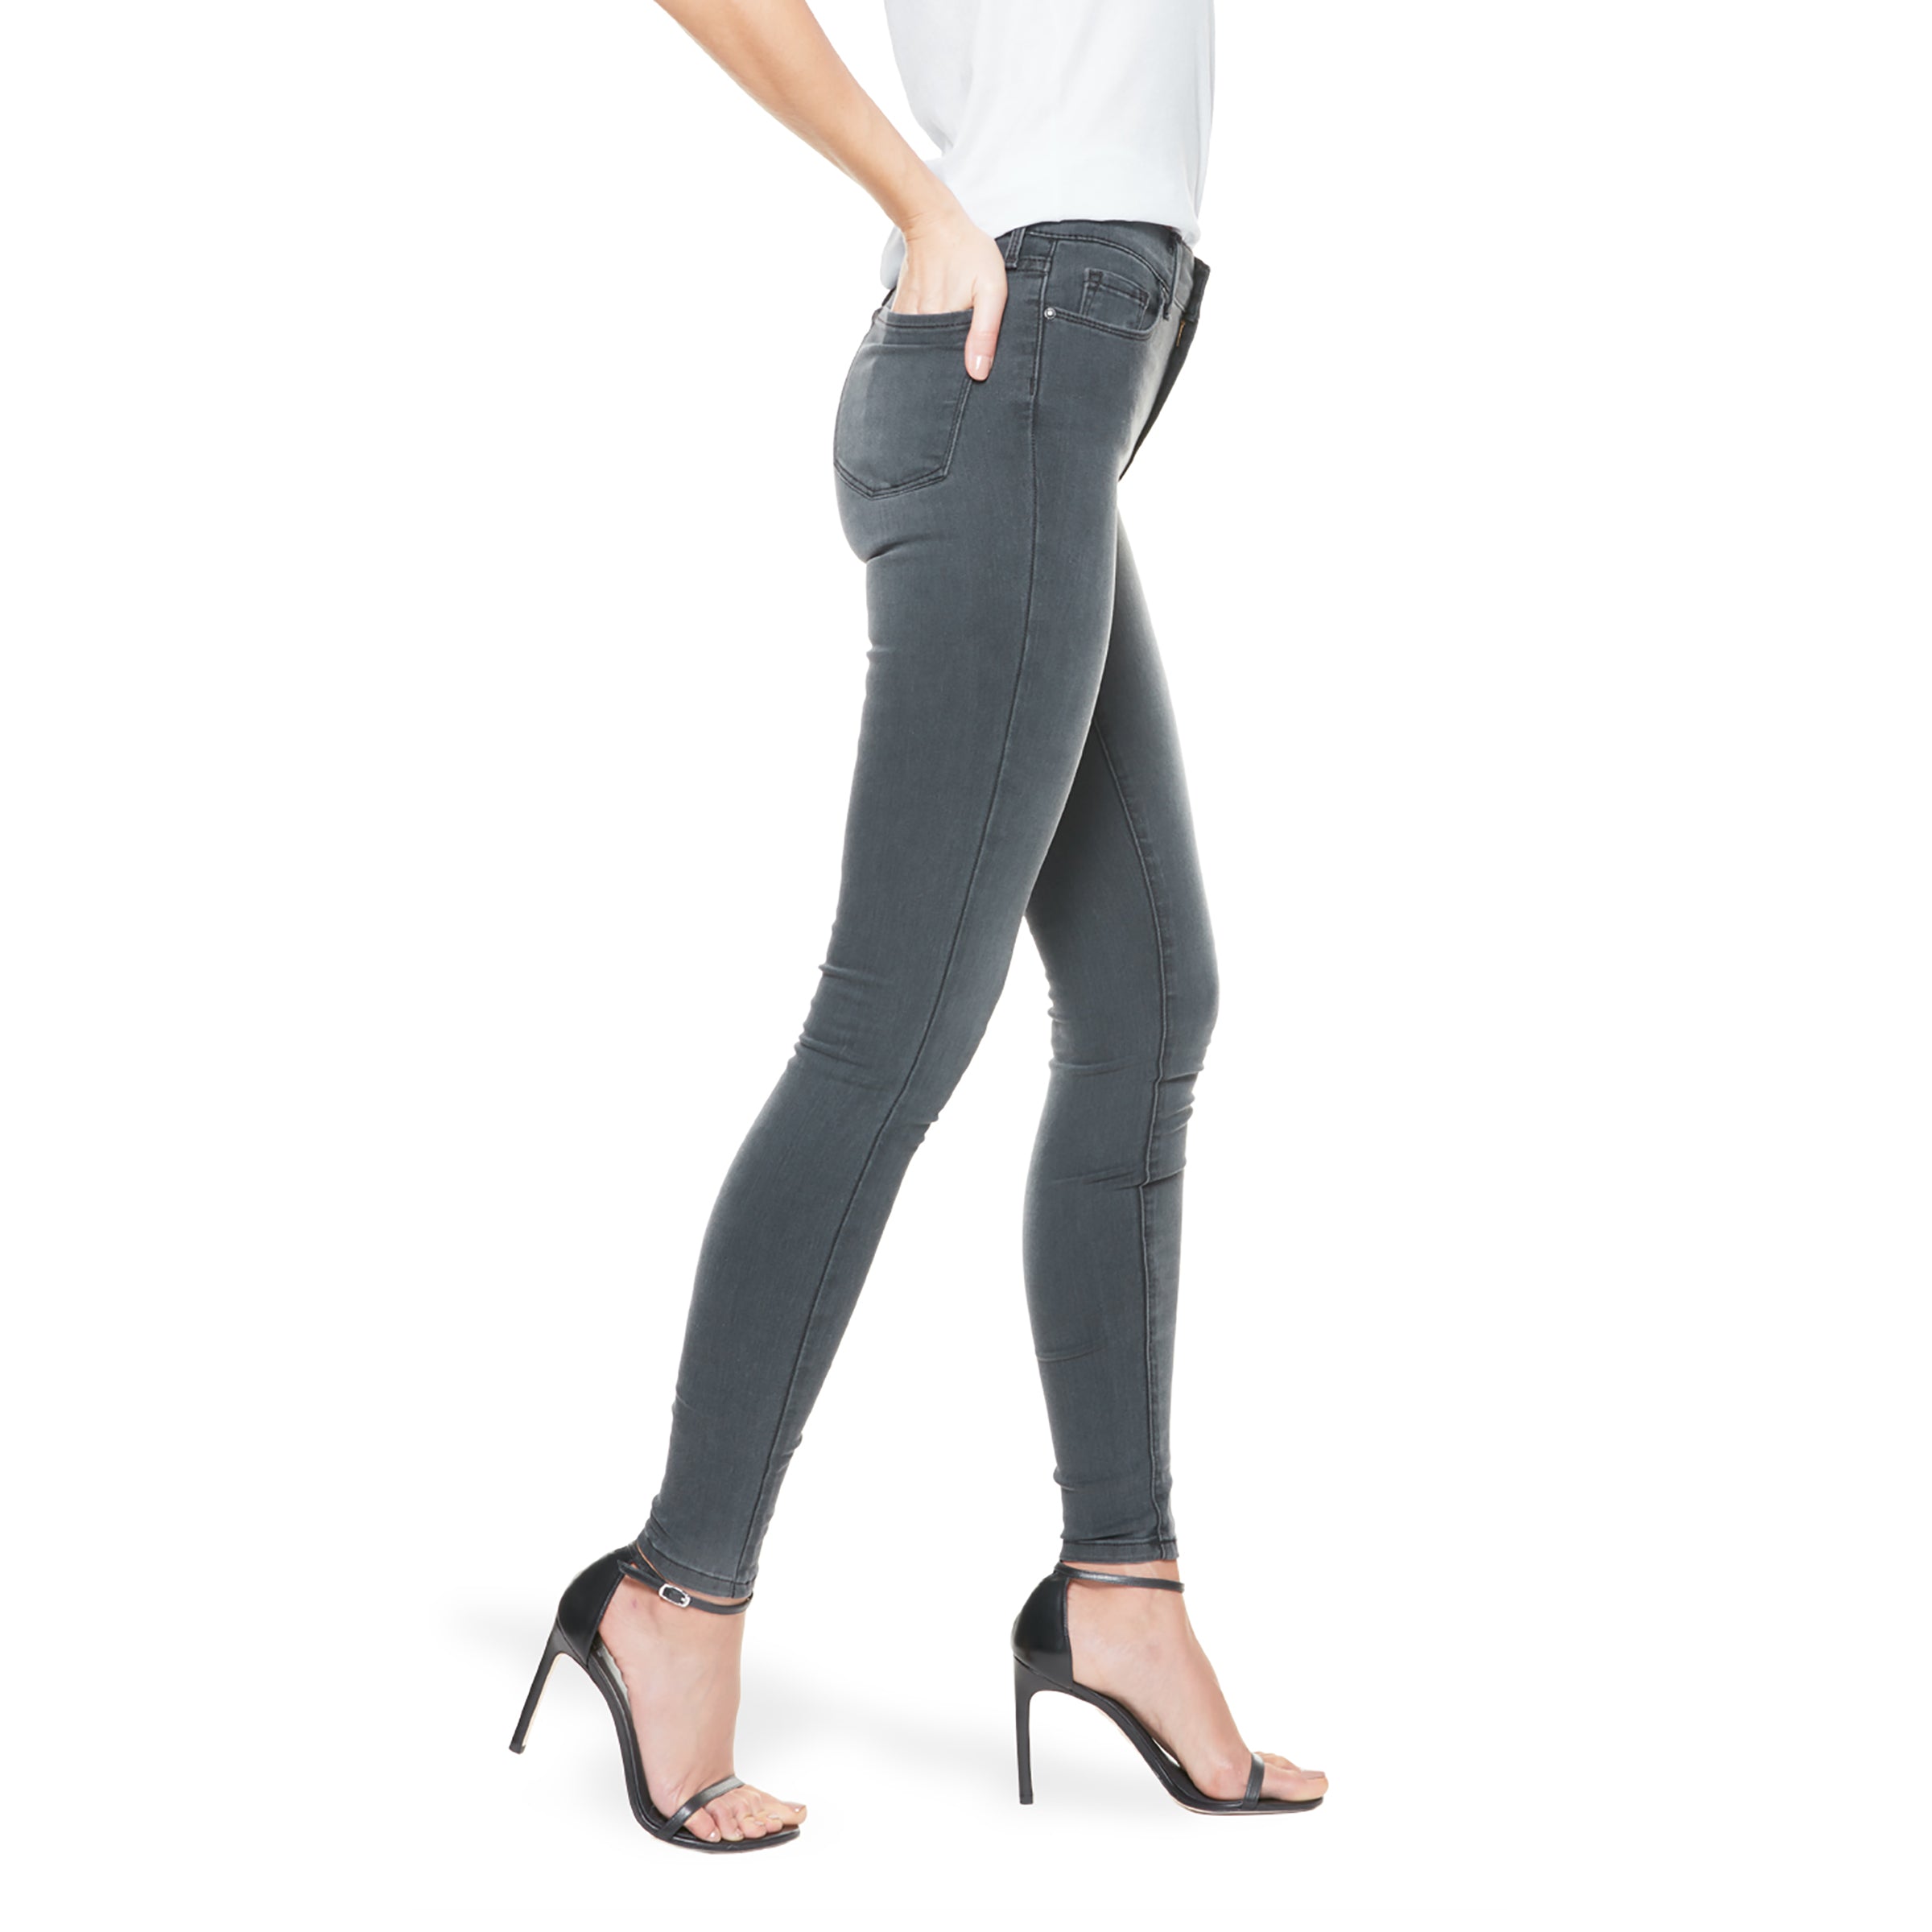 Women wearing Medium Gray High Rise Skinny Orchard Jeans